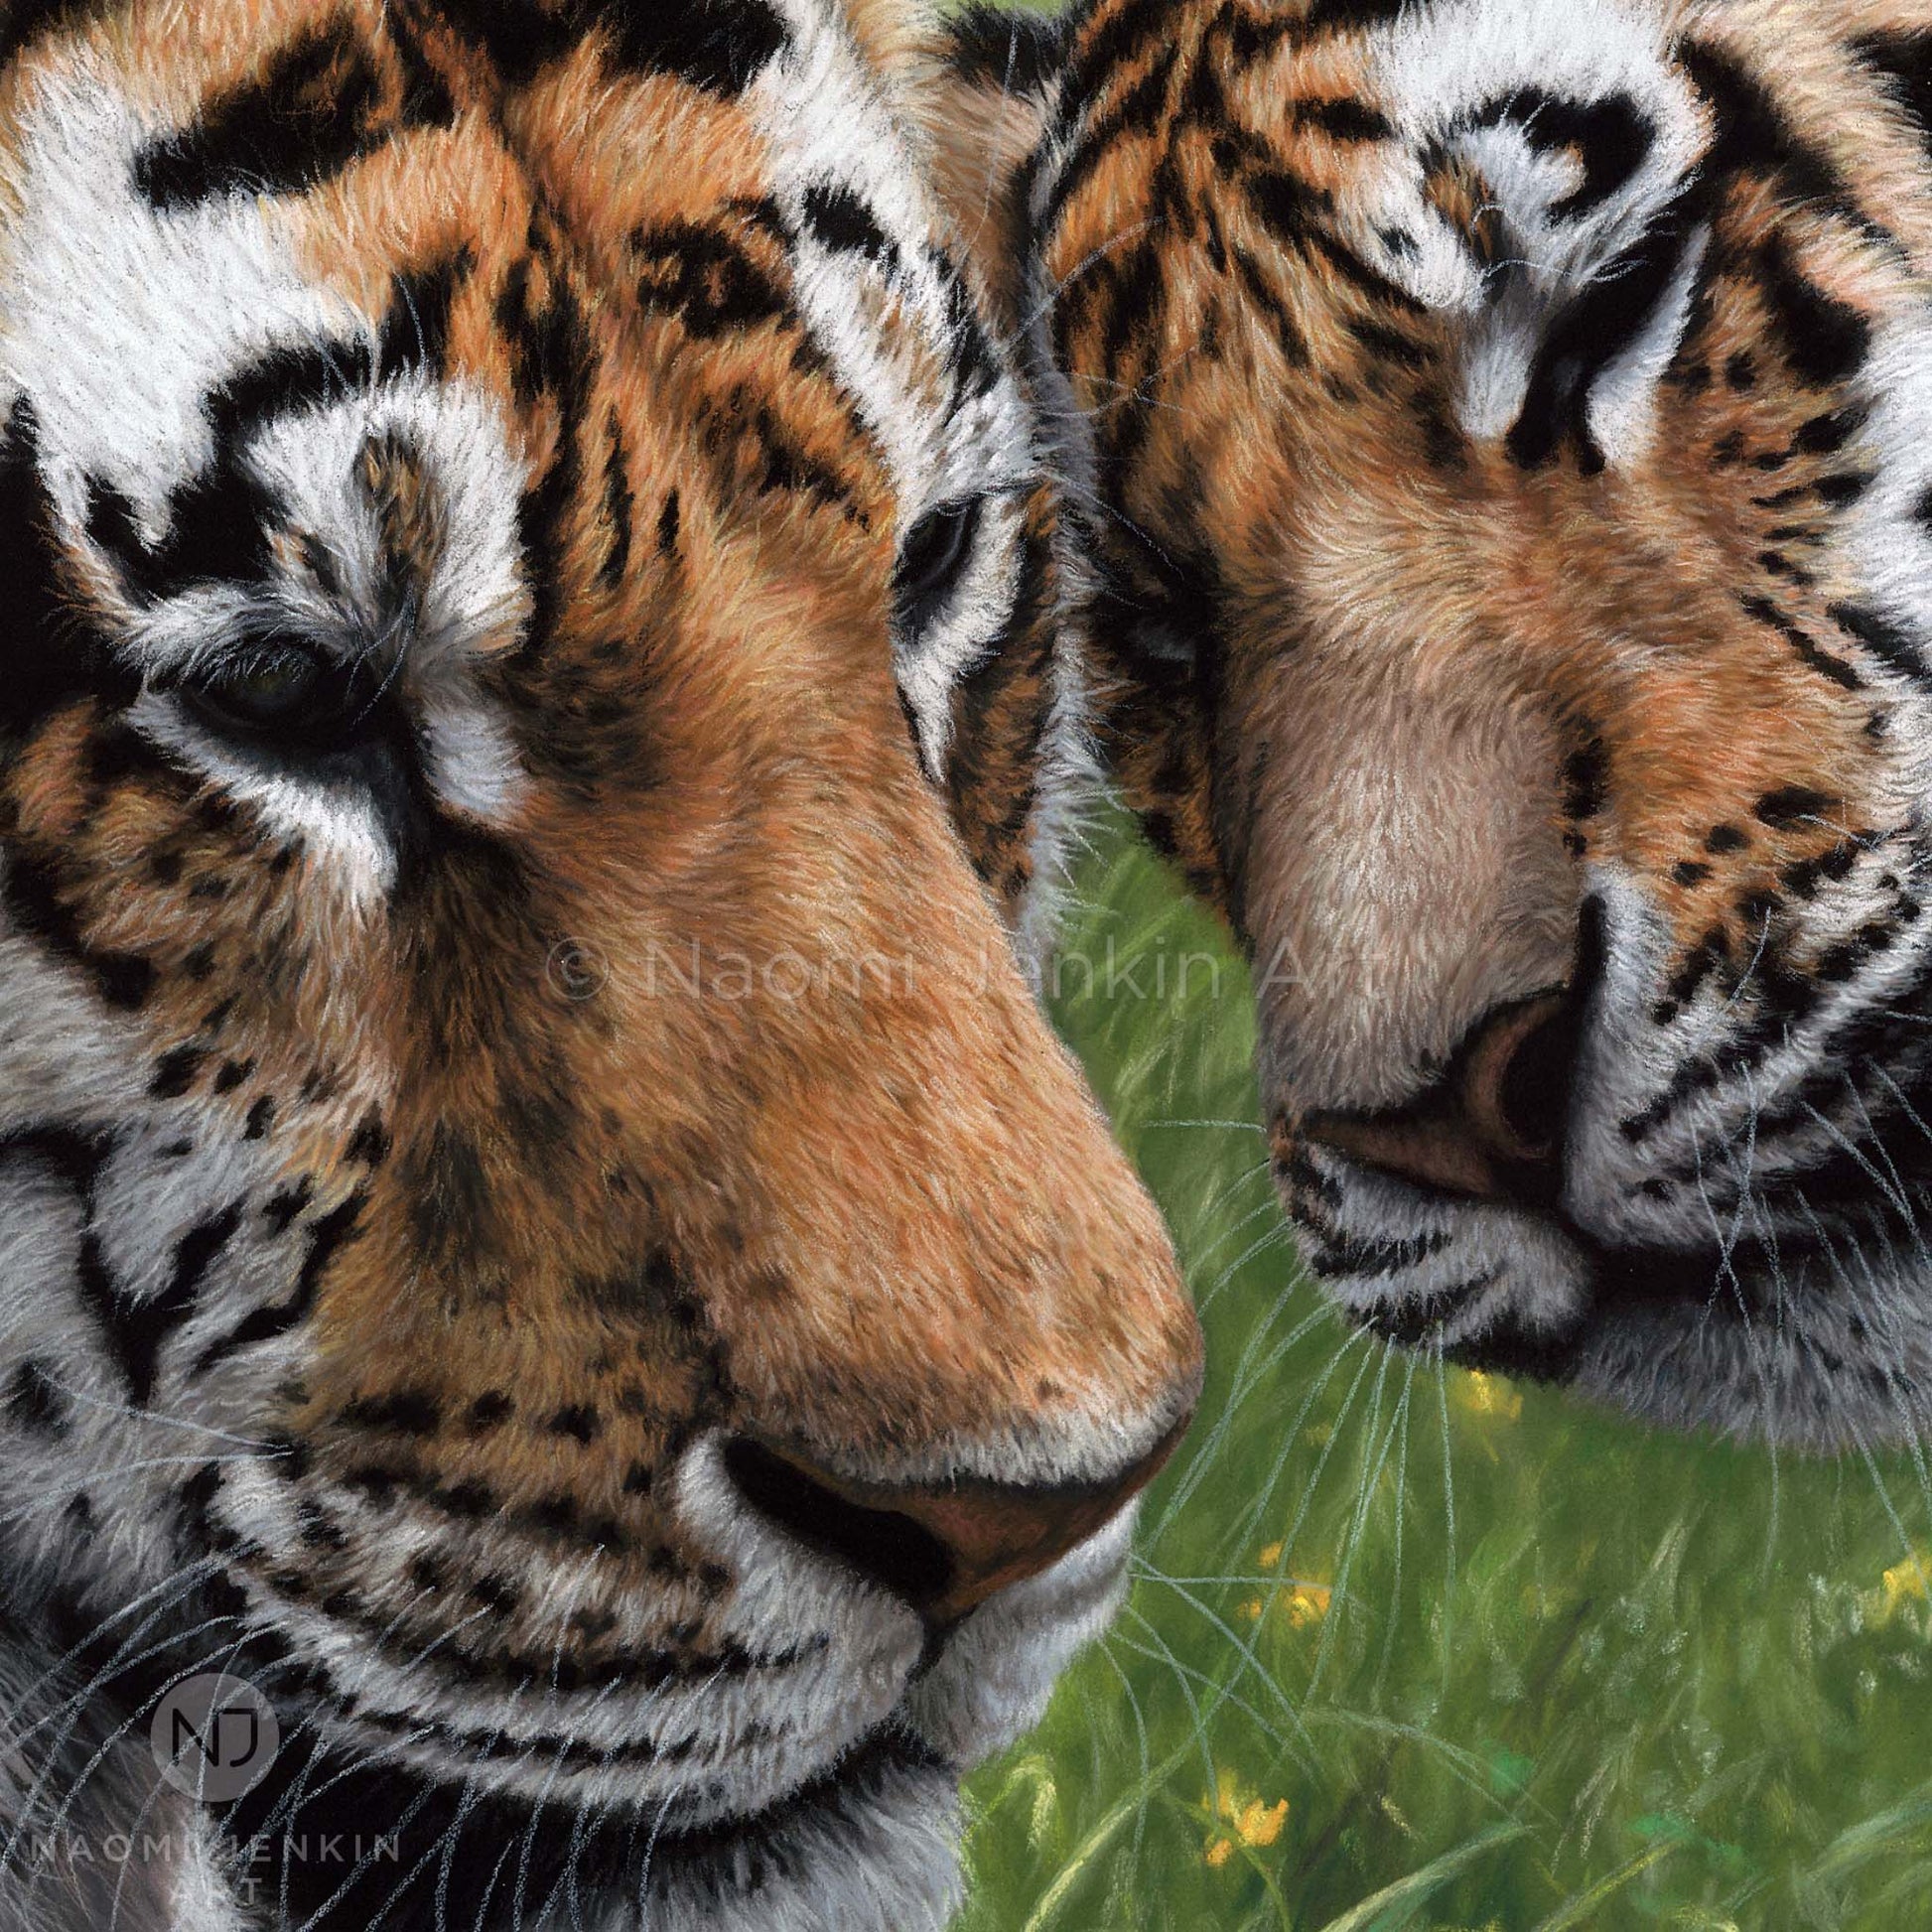 Tiger art print by wildlife artist Naomi Jenkin